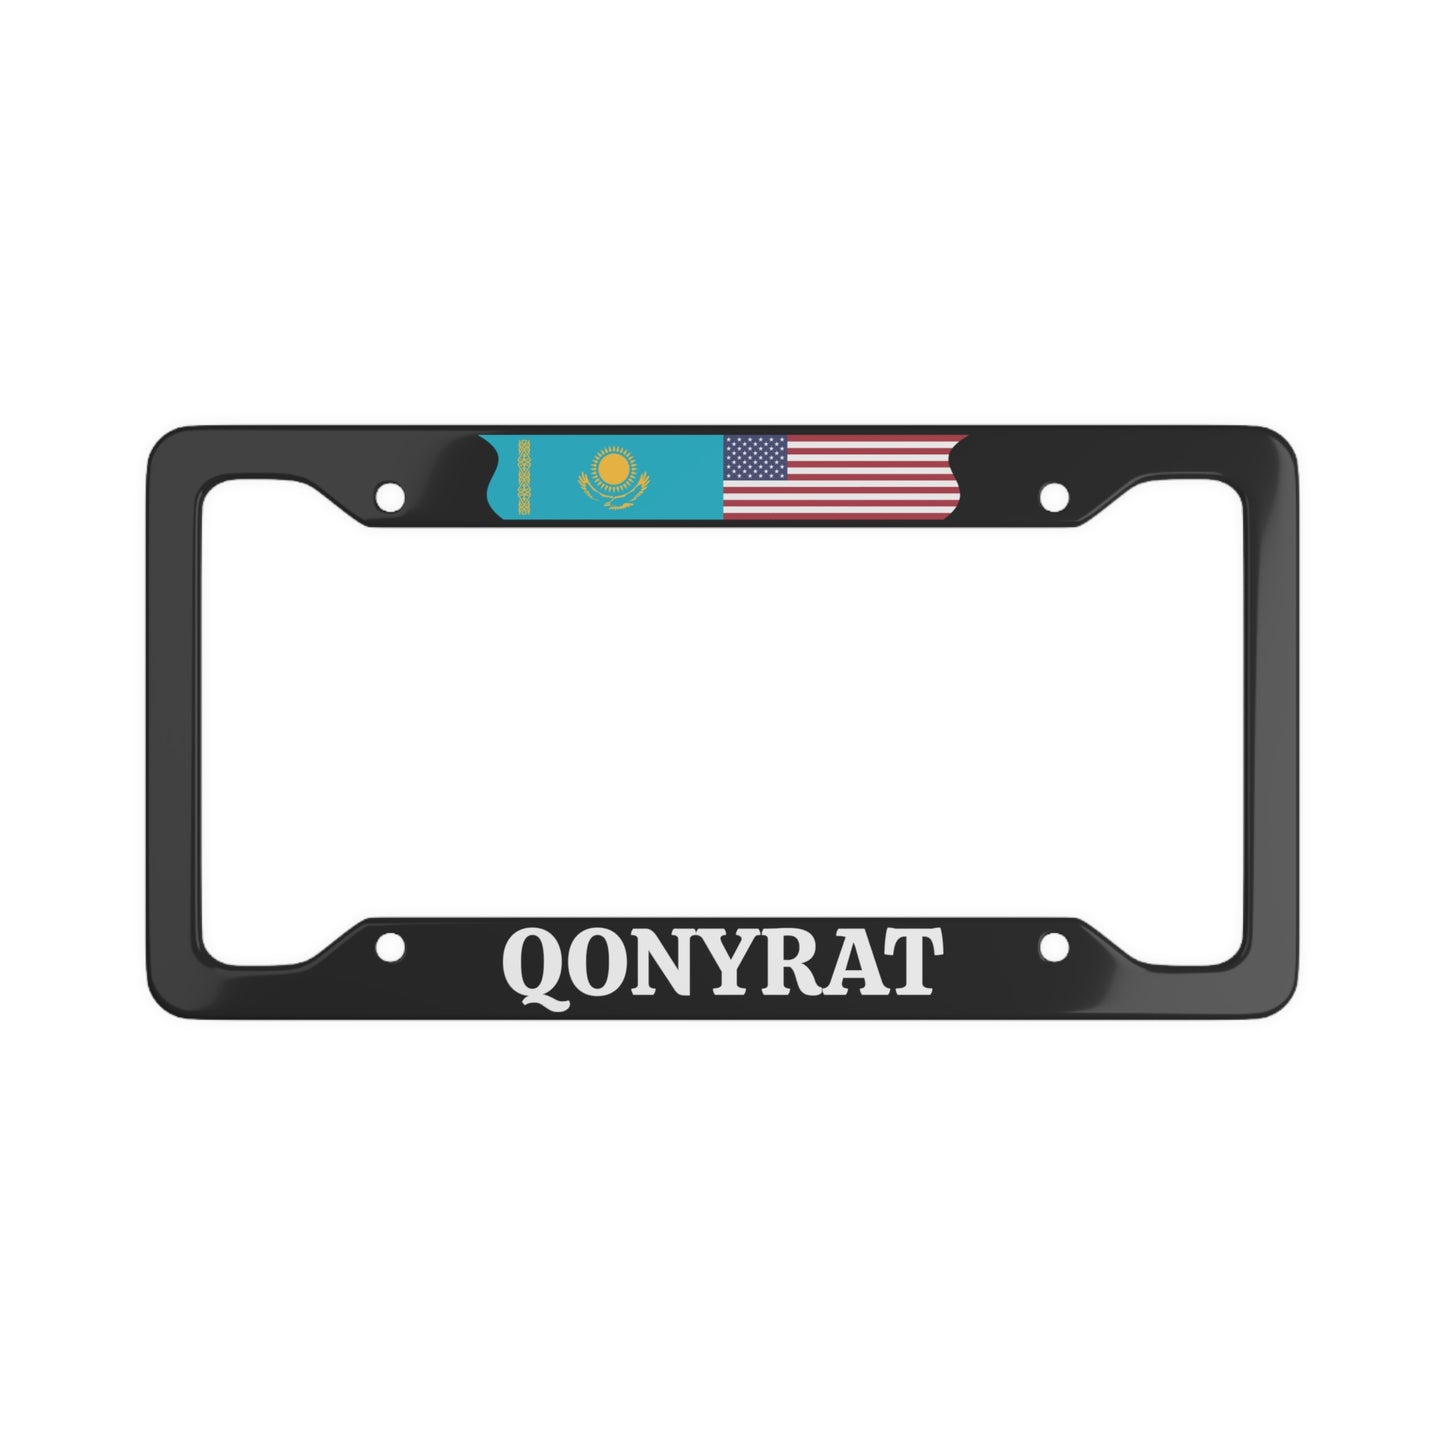 QONYRAT with flag License Plate Frame